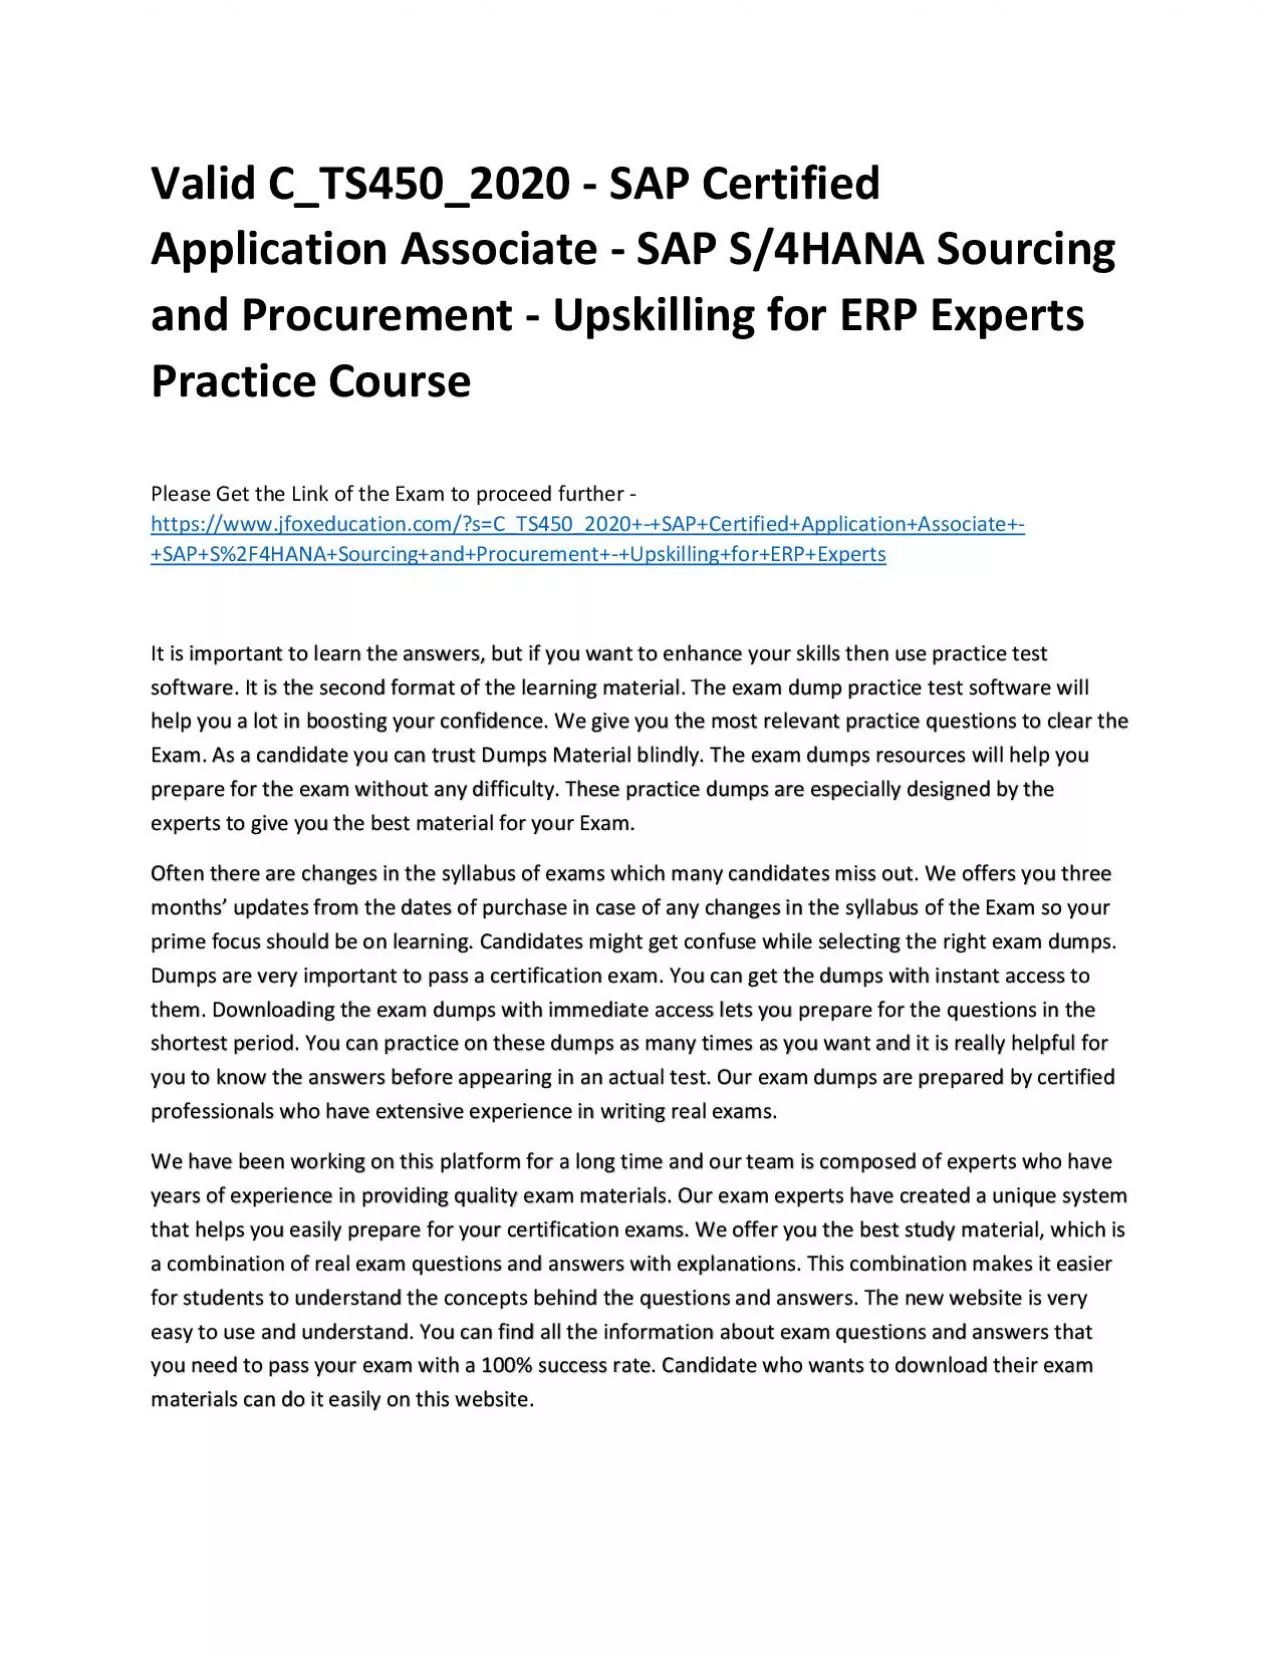 Valid C_TS450_2020 - SAP Certified Application Associate - SAP S/4HANA Sourcing and Procurement